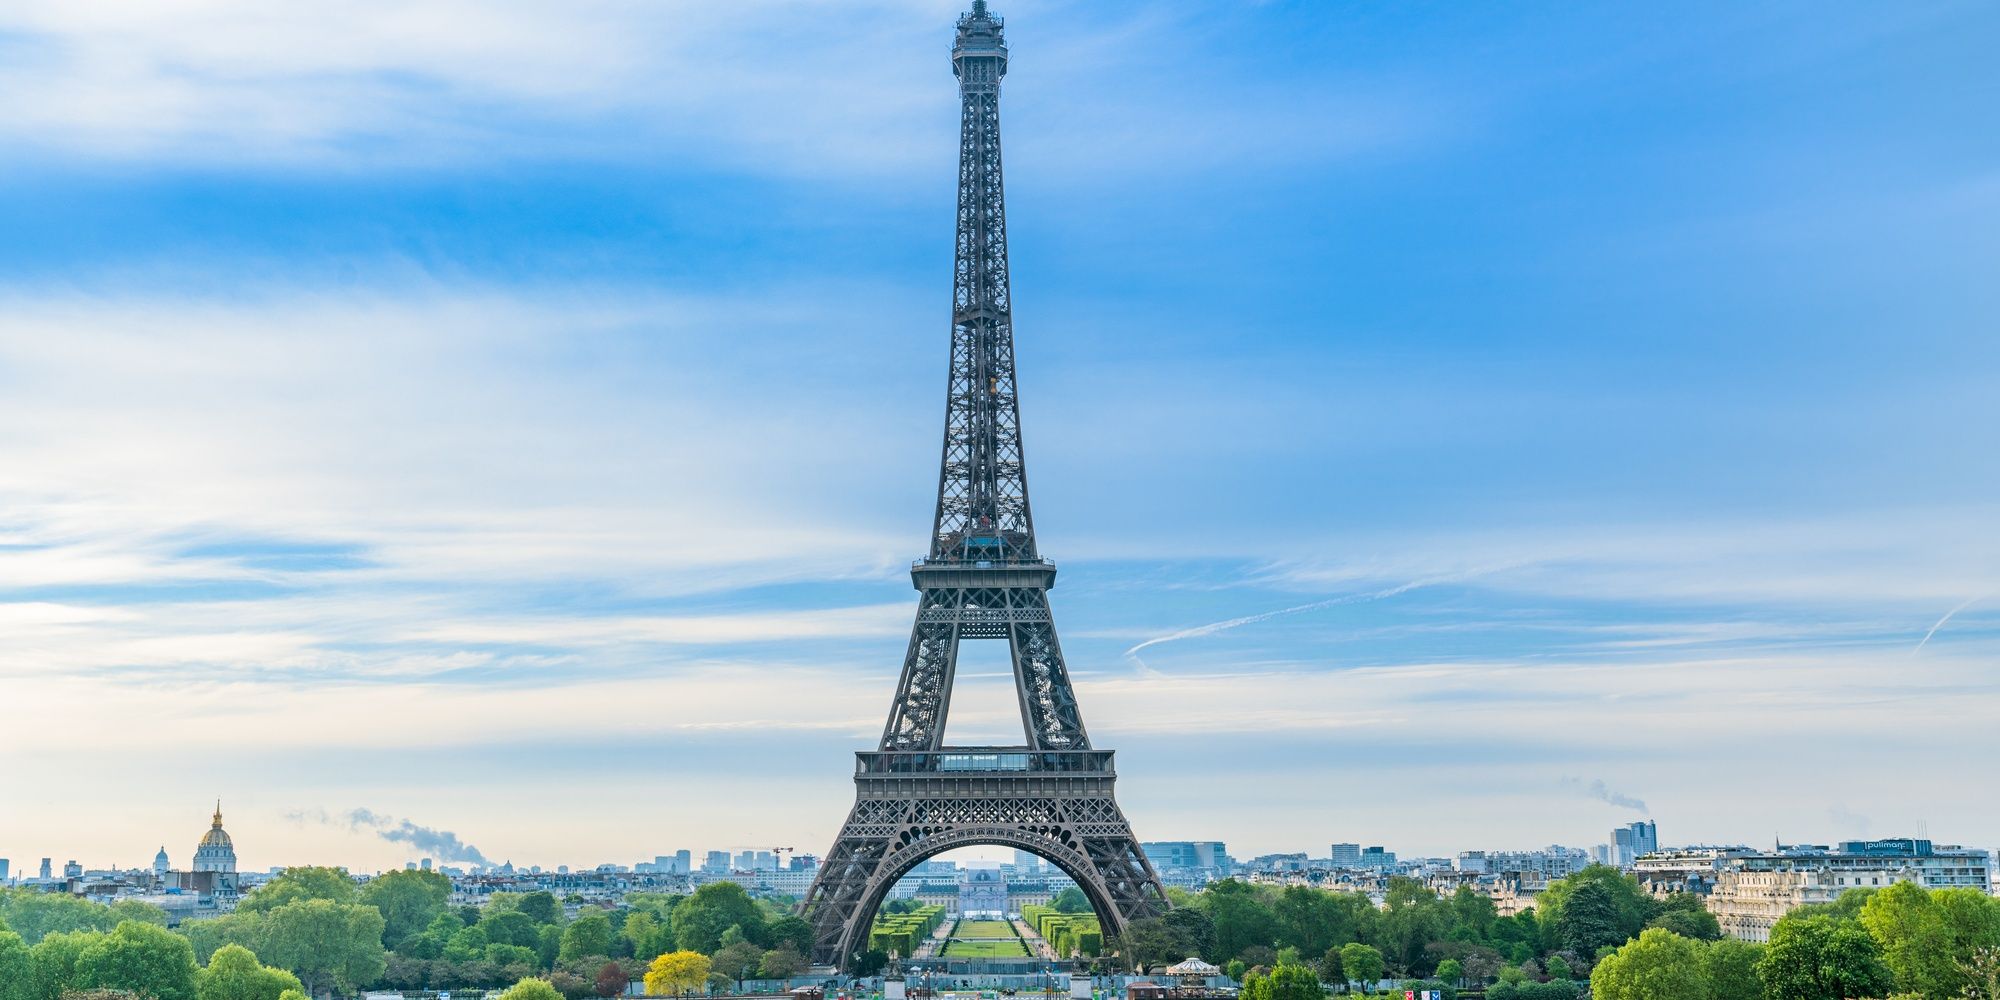 Eiffel Tower as seen in Paris, France